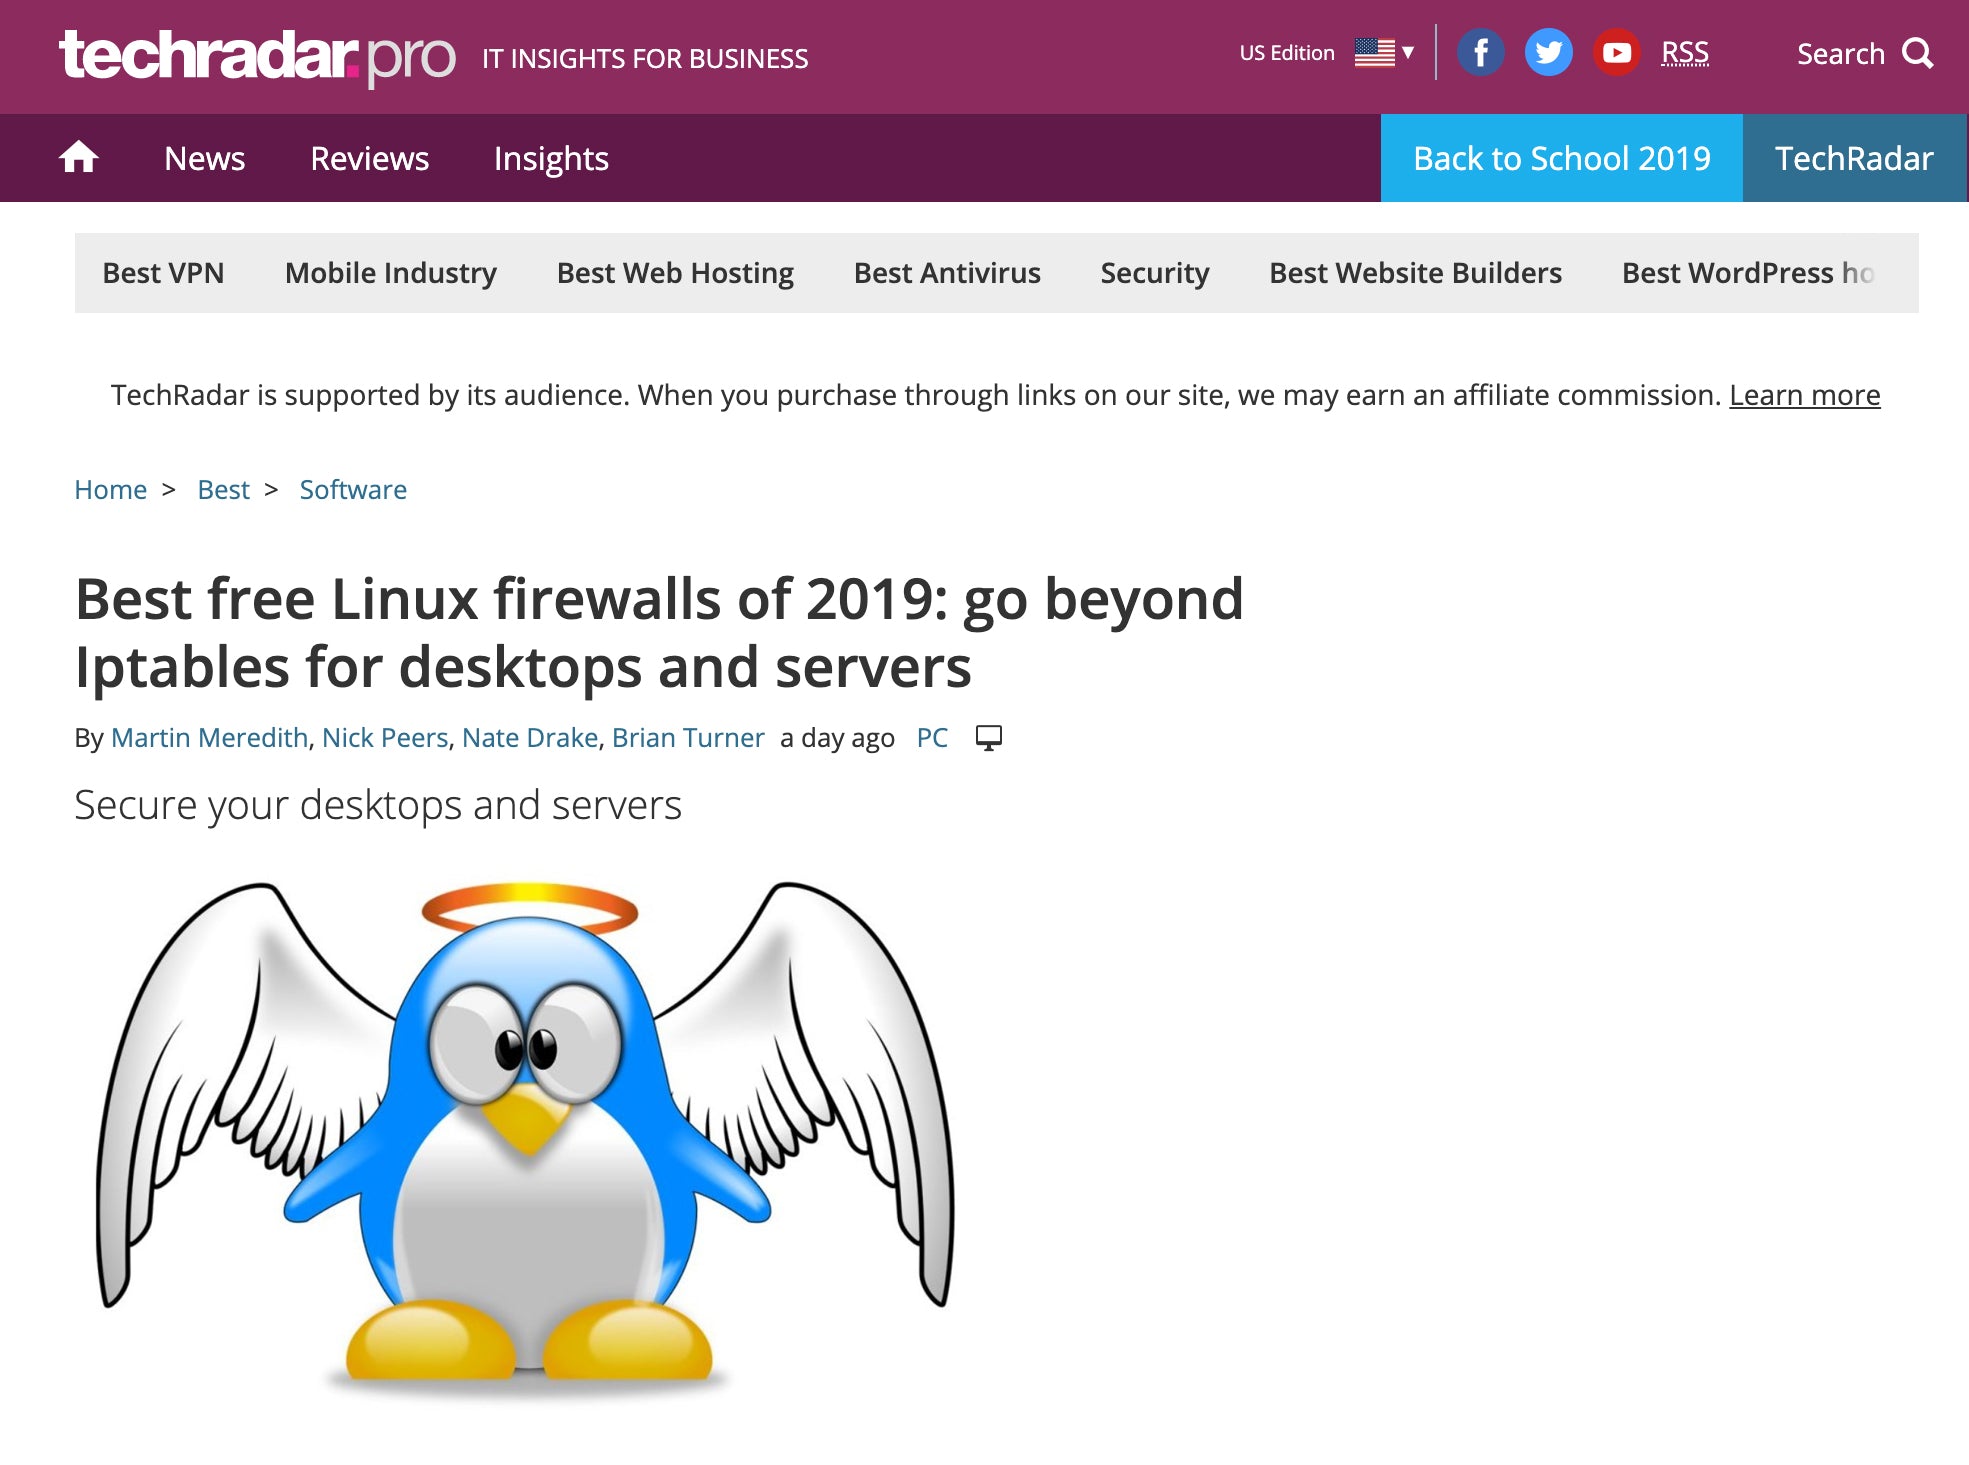 TechRadar Names ClearOS as Best Free Linux Firewall of 2019